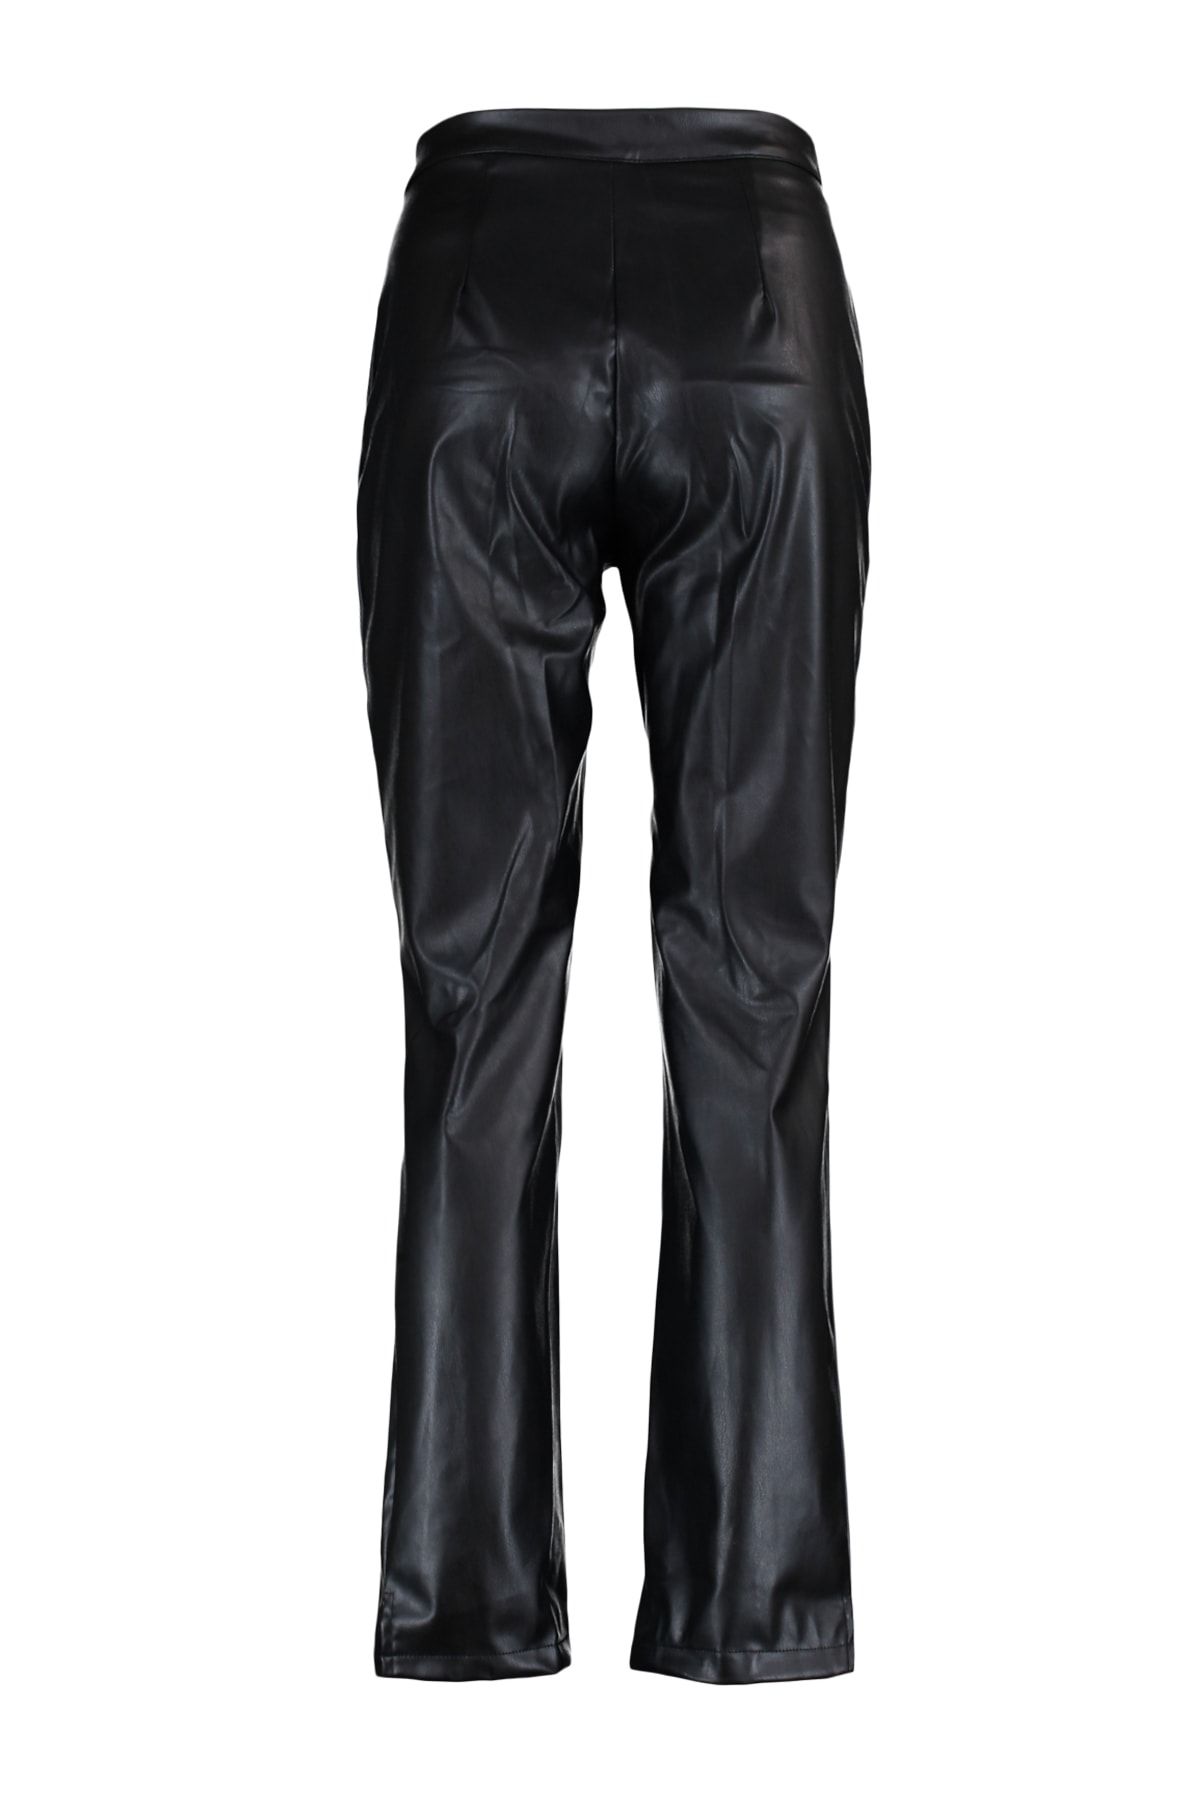 Trendyol Collection Black Woven High Waist Zipper Detailed Faux